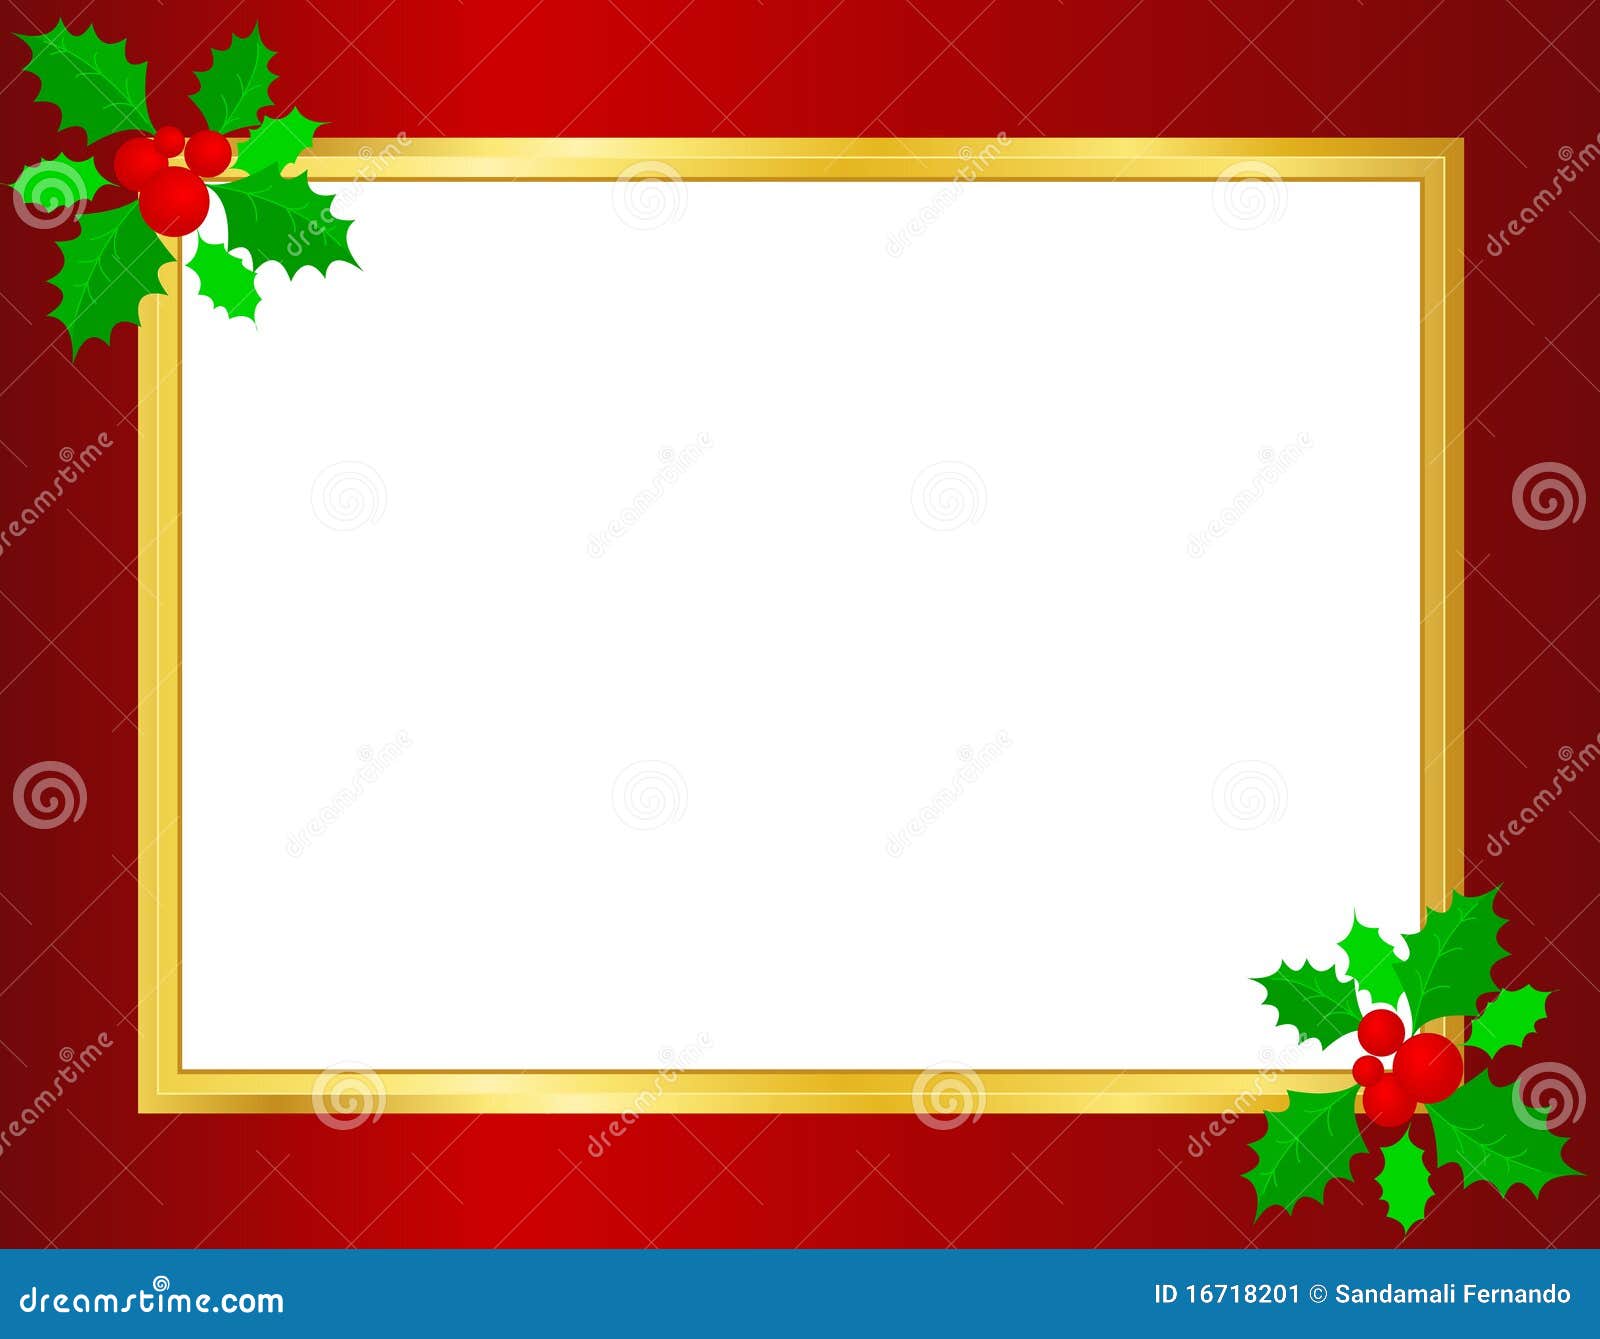 Spijsverteringsorgaan shuttle in verlegenheid gebracht Christmas border stock vector. Illustration of gold, drawing - 16718201